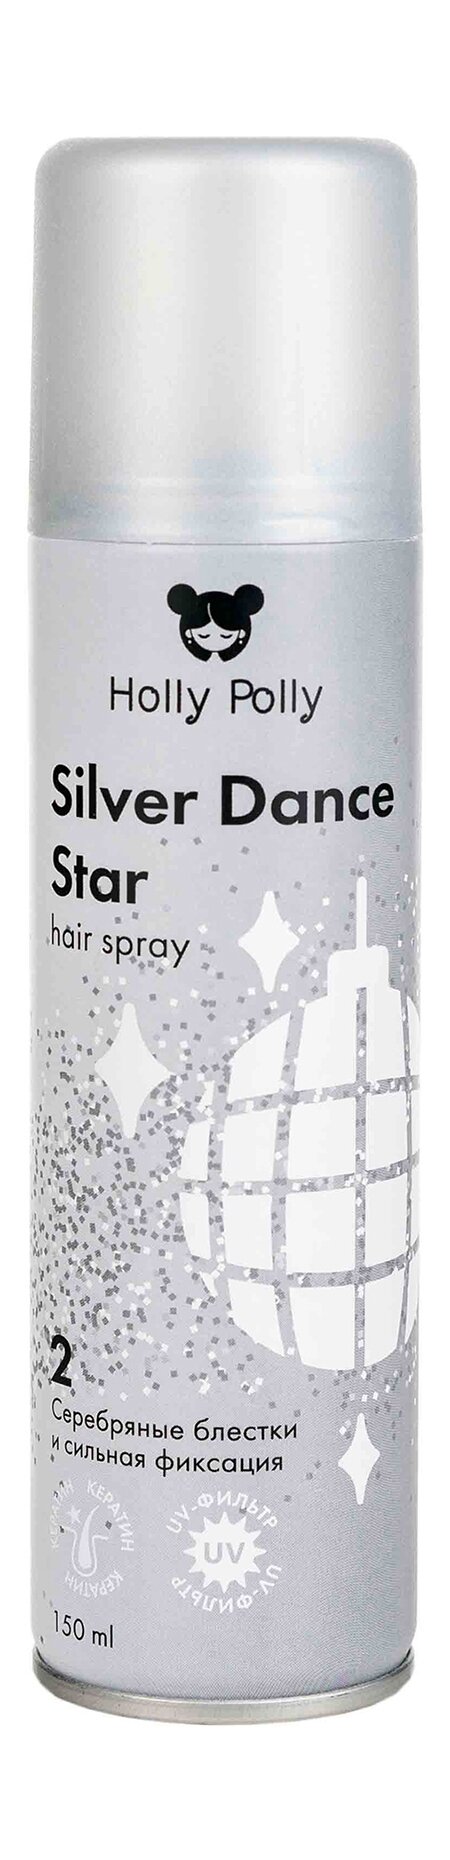 HOLLY POLLY Лак для волос Holly Polly Silver Dance Star сильной фиксации с серебряными блестками 150 мл